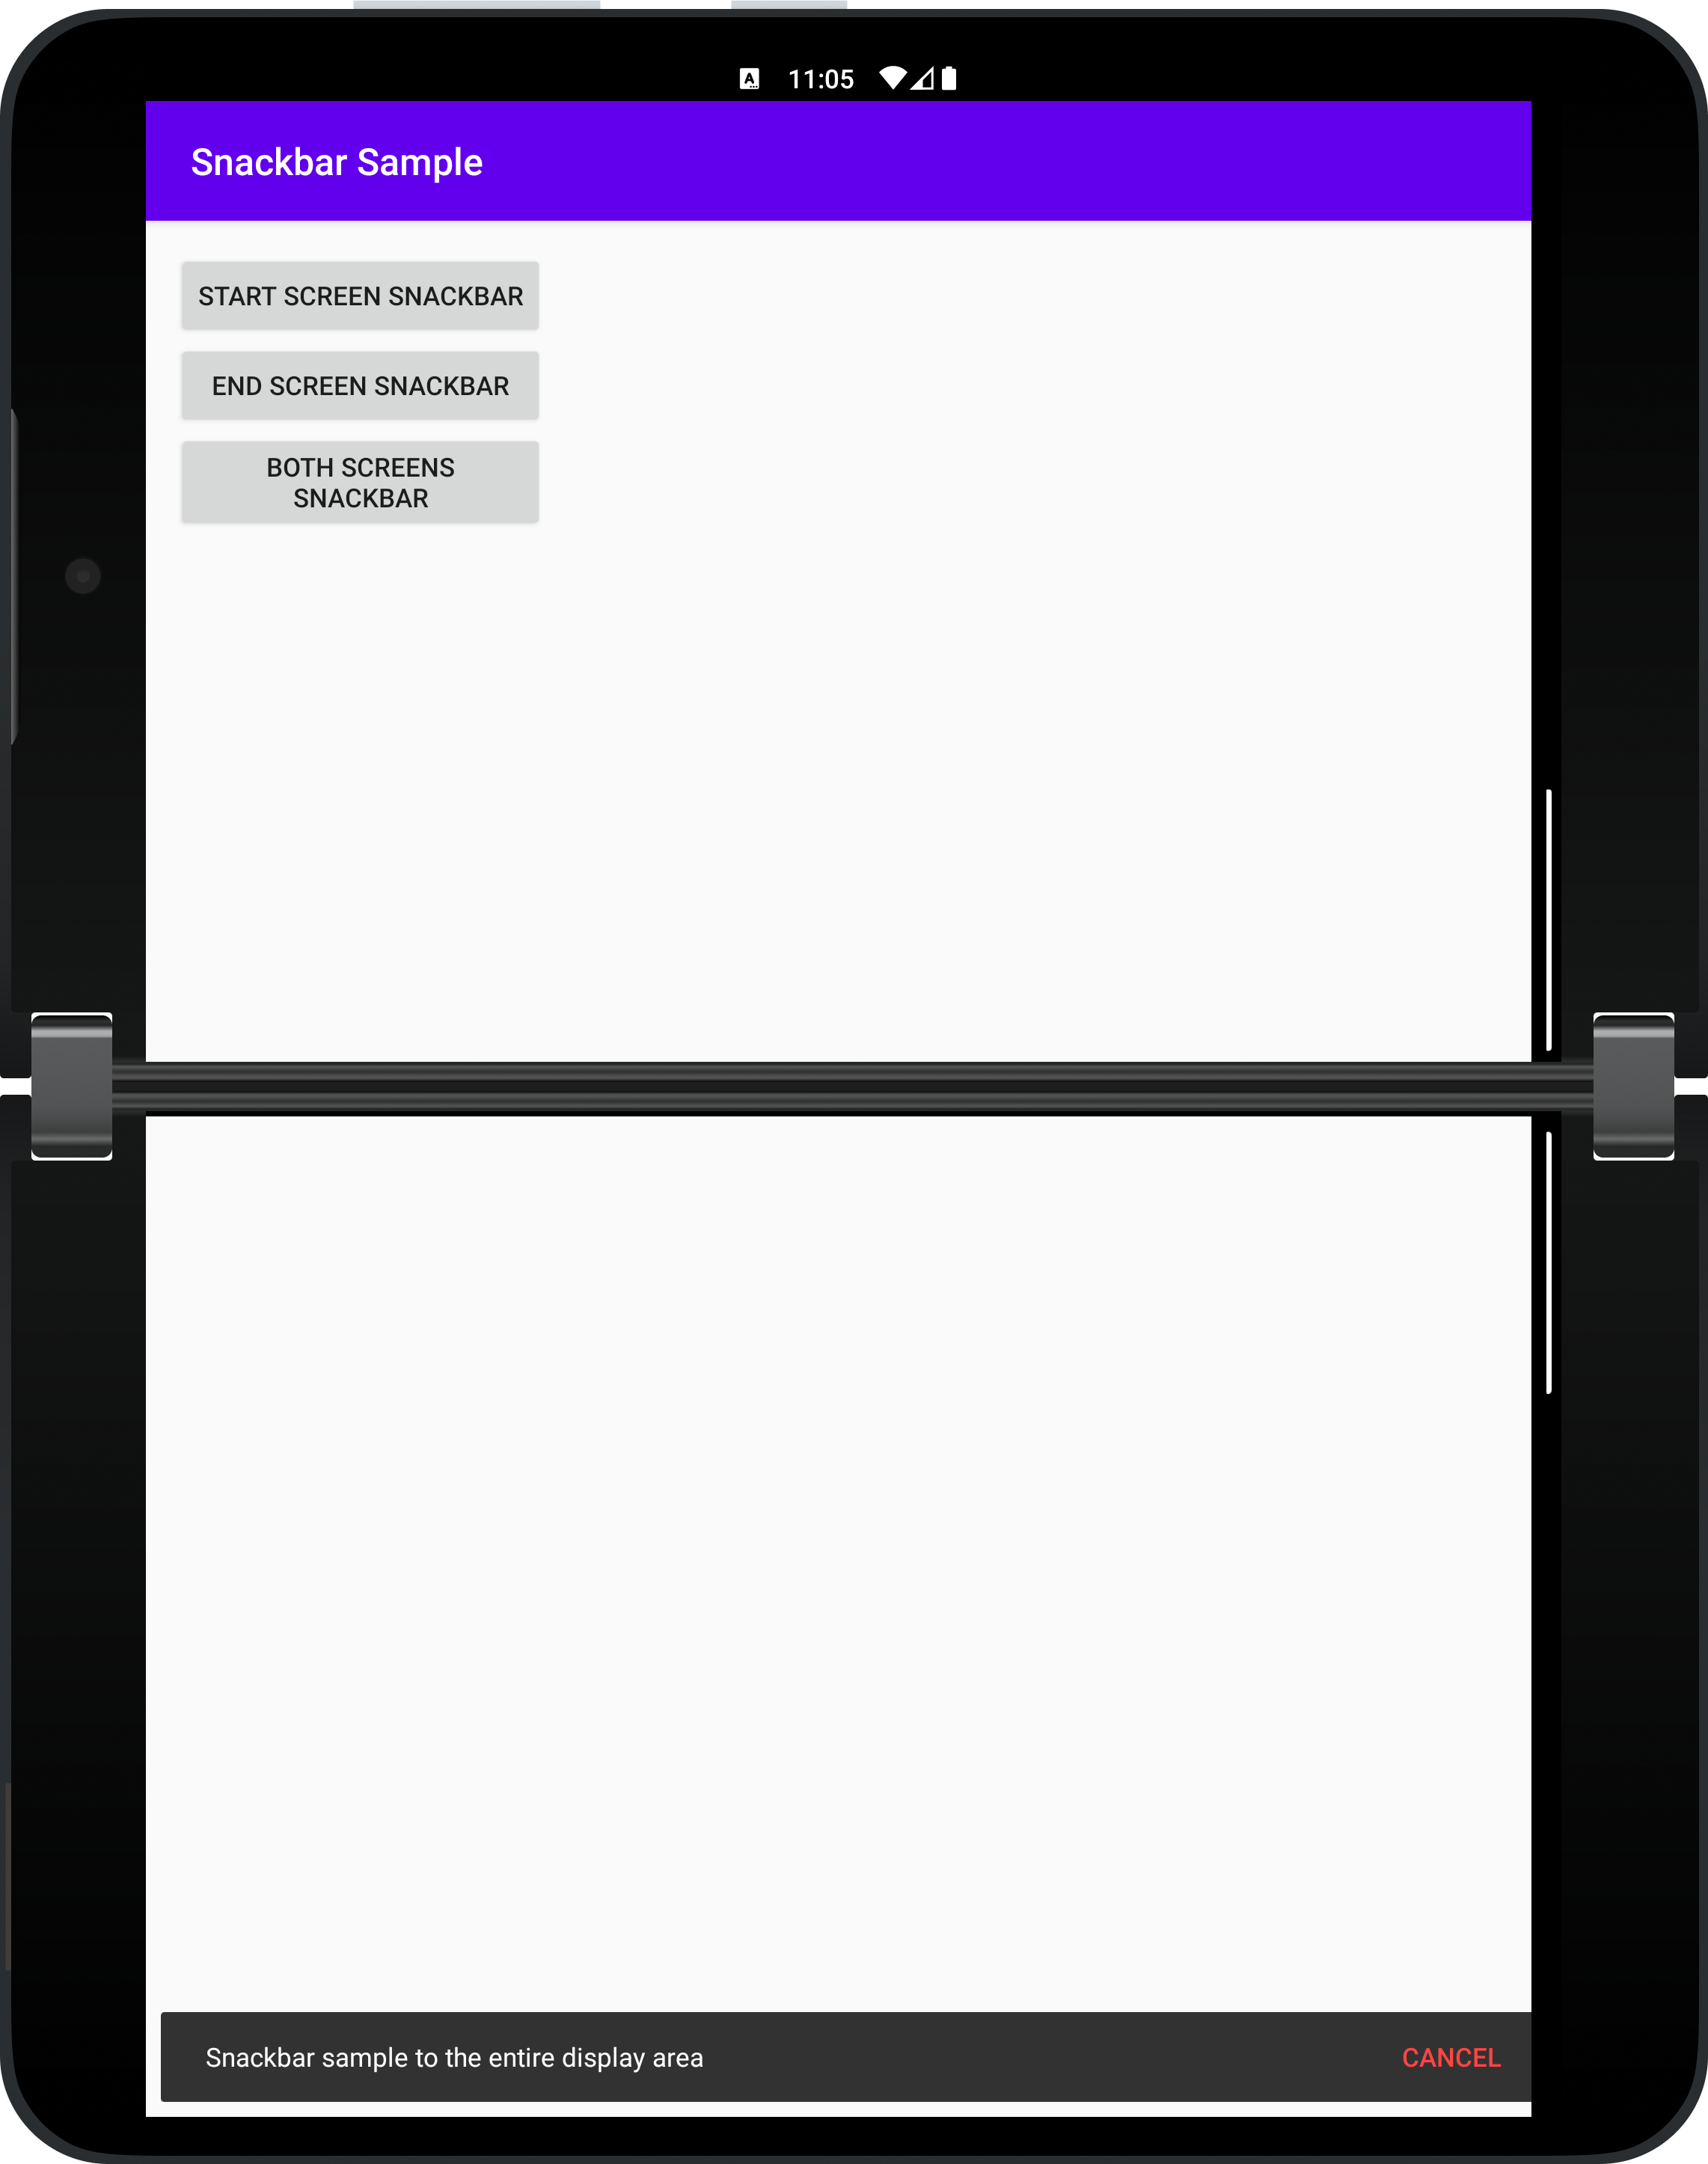 BOTH: snackbar on both screens, landscape orientation